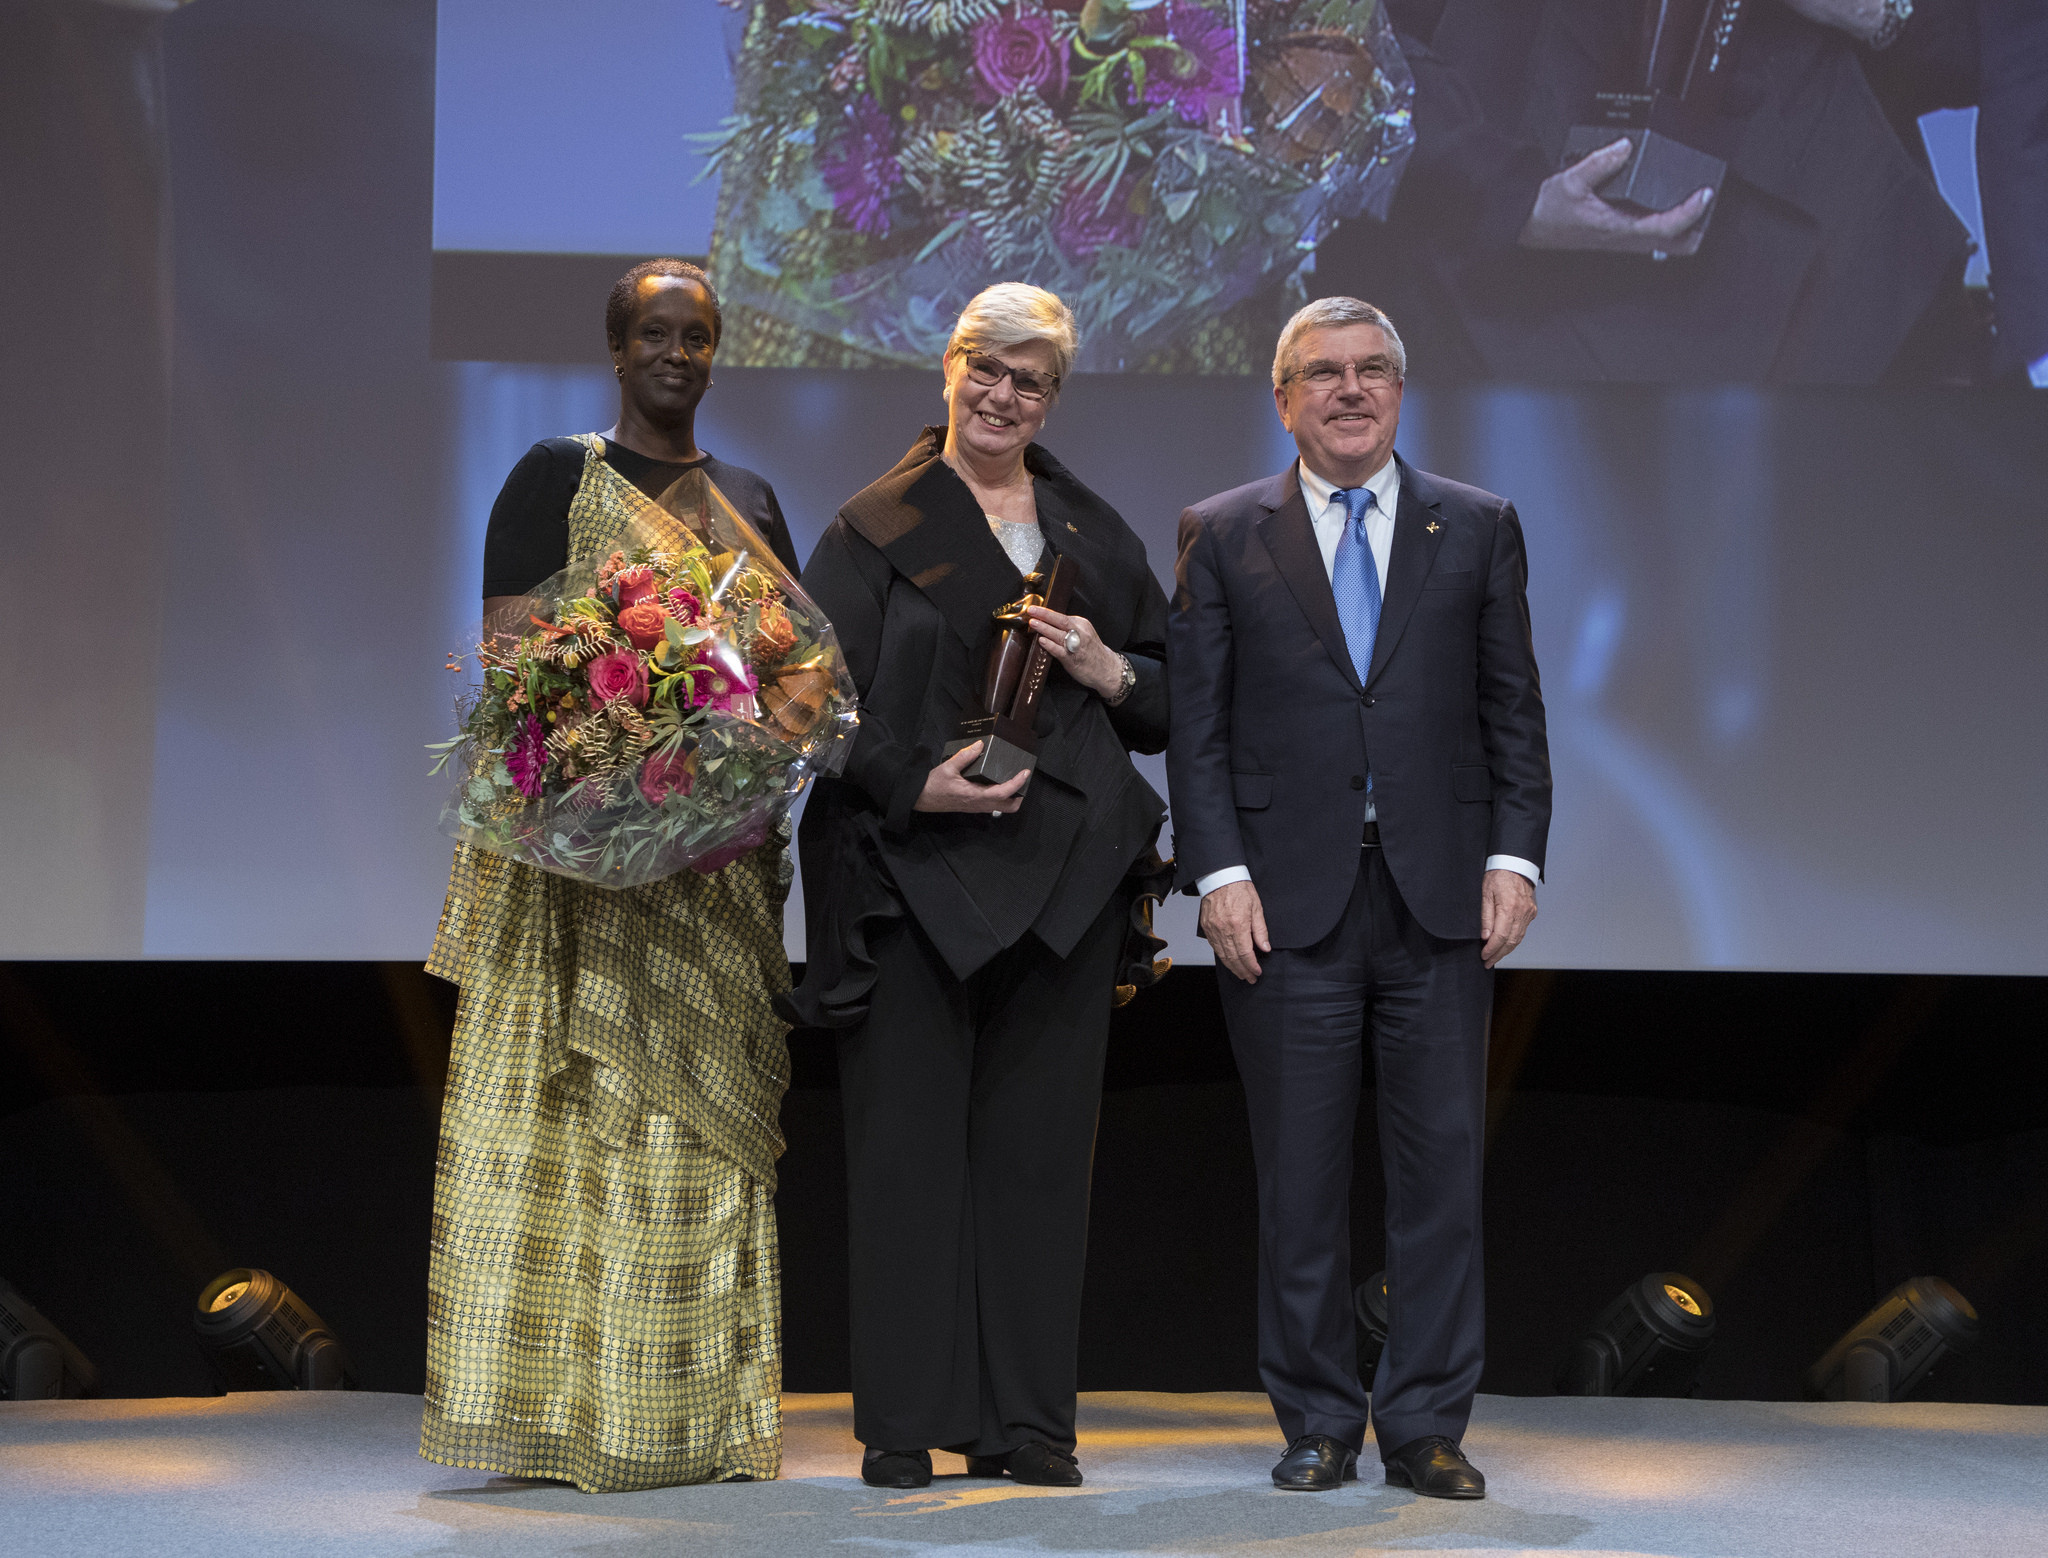 Birgitta Kervinen received the World Trophy at the Women in Sport Awards ©IOC/Flickr